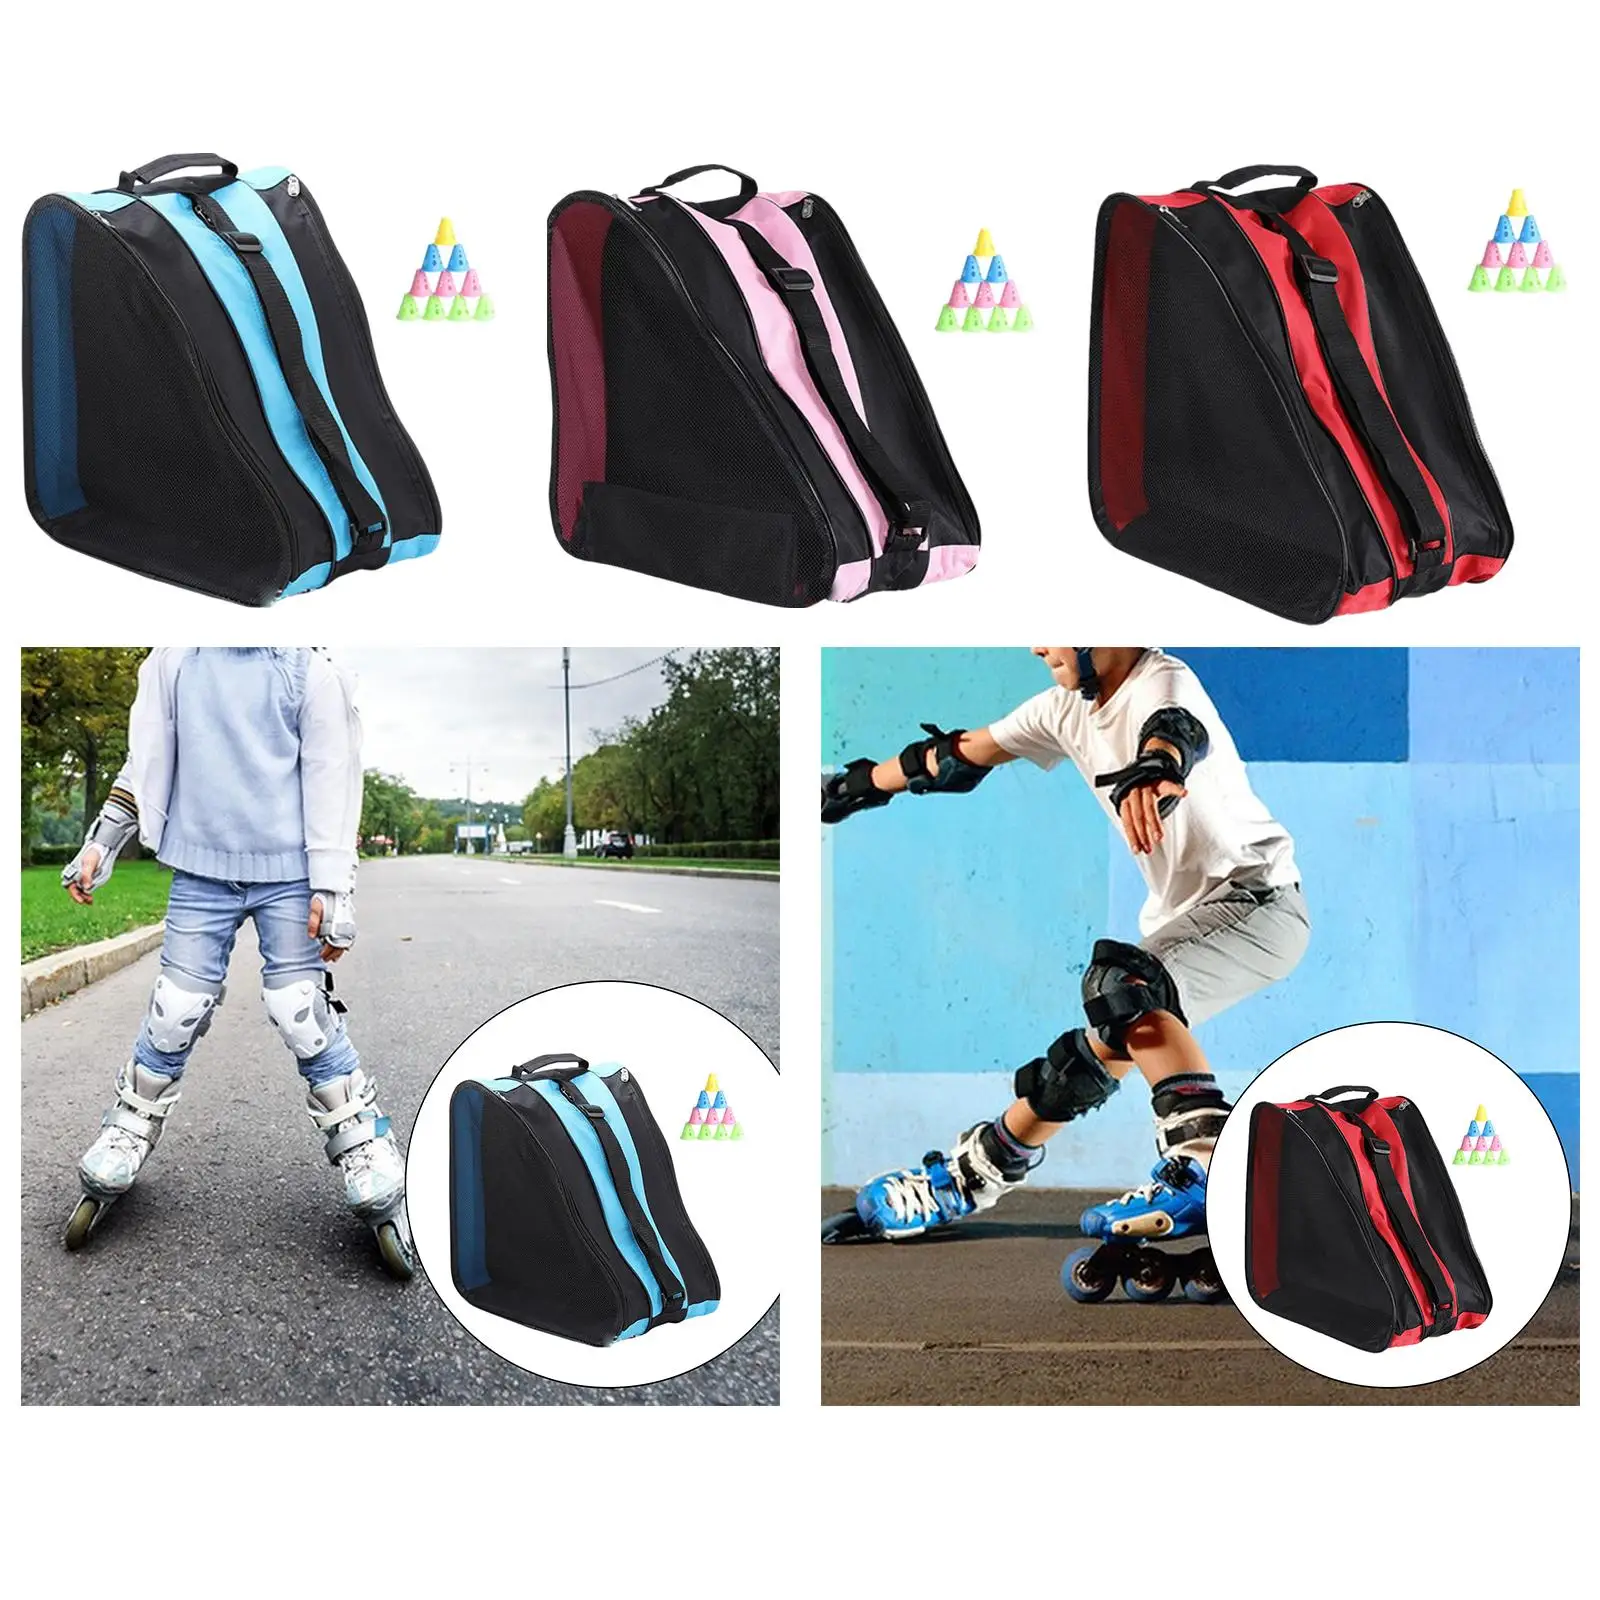 Roller Skate Bag Breathable Ice Skating Bag 3 Layer Skate Carry Case Skating Shoes Storage Bag for Knee Pads Ice Hockey Skate